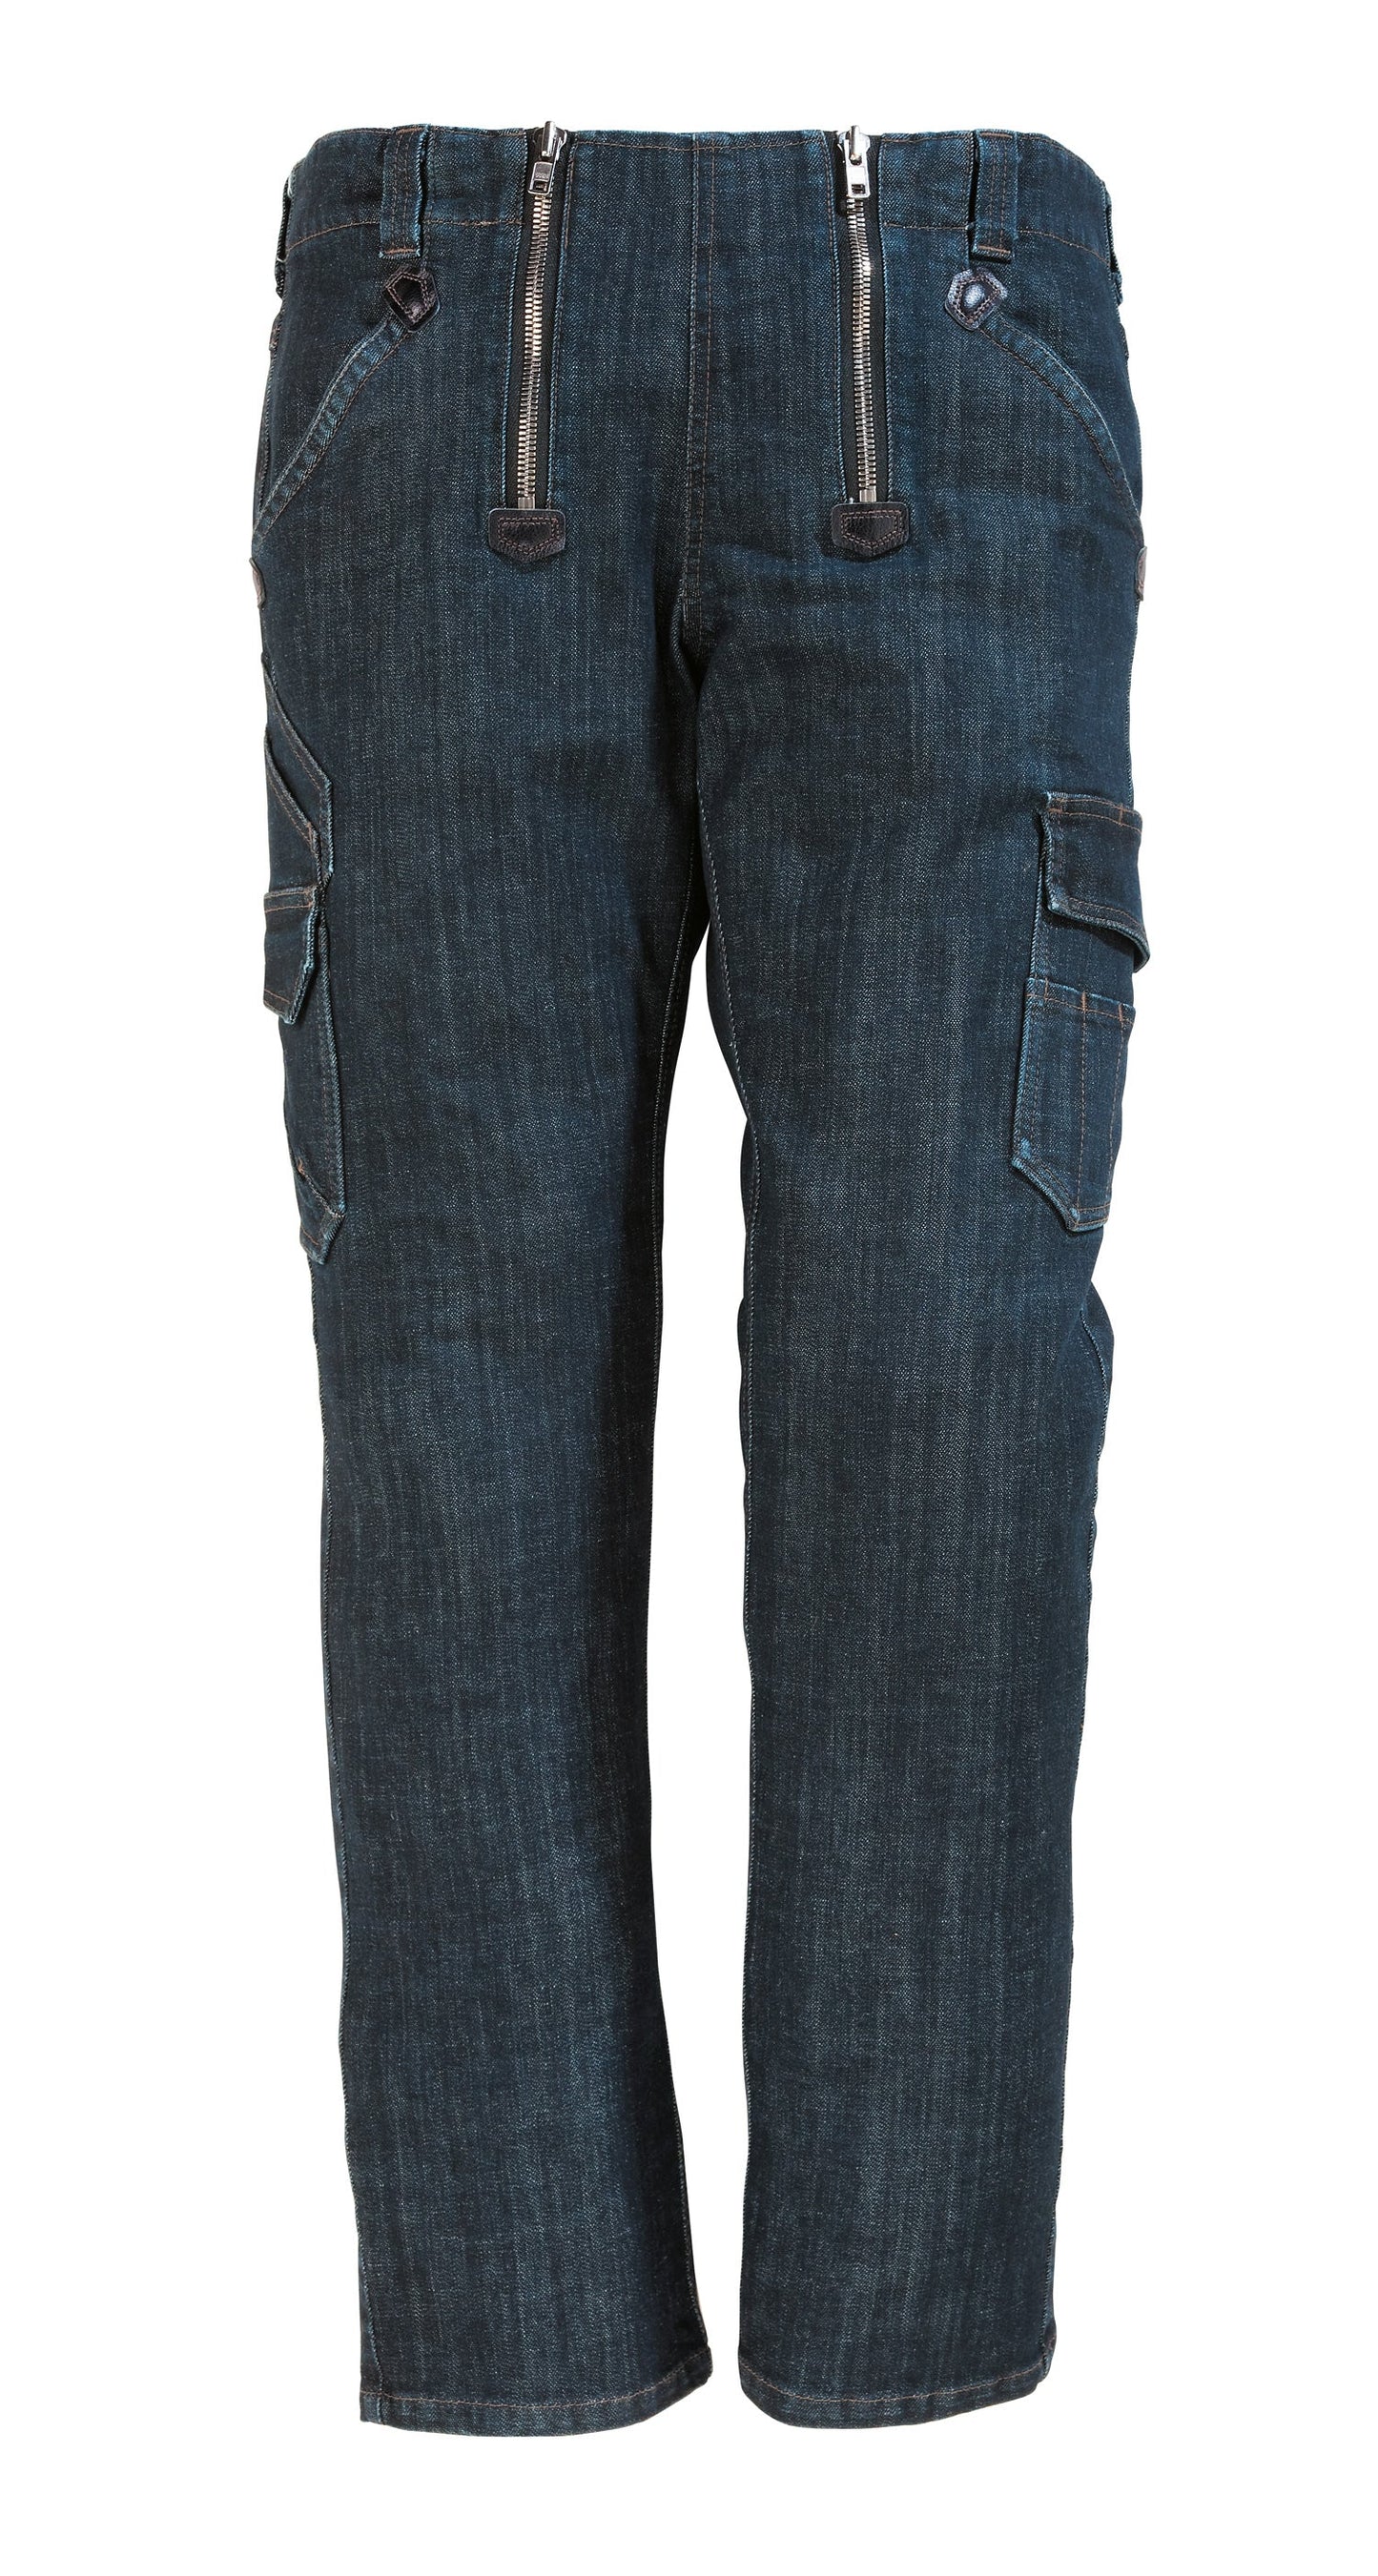 FHB FRIEDHELM Jeans Zunfthose LYCRA-STRETCH, schwarzblau